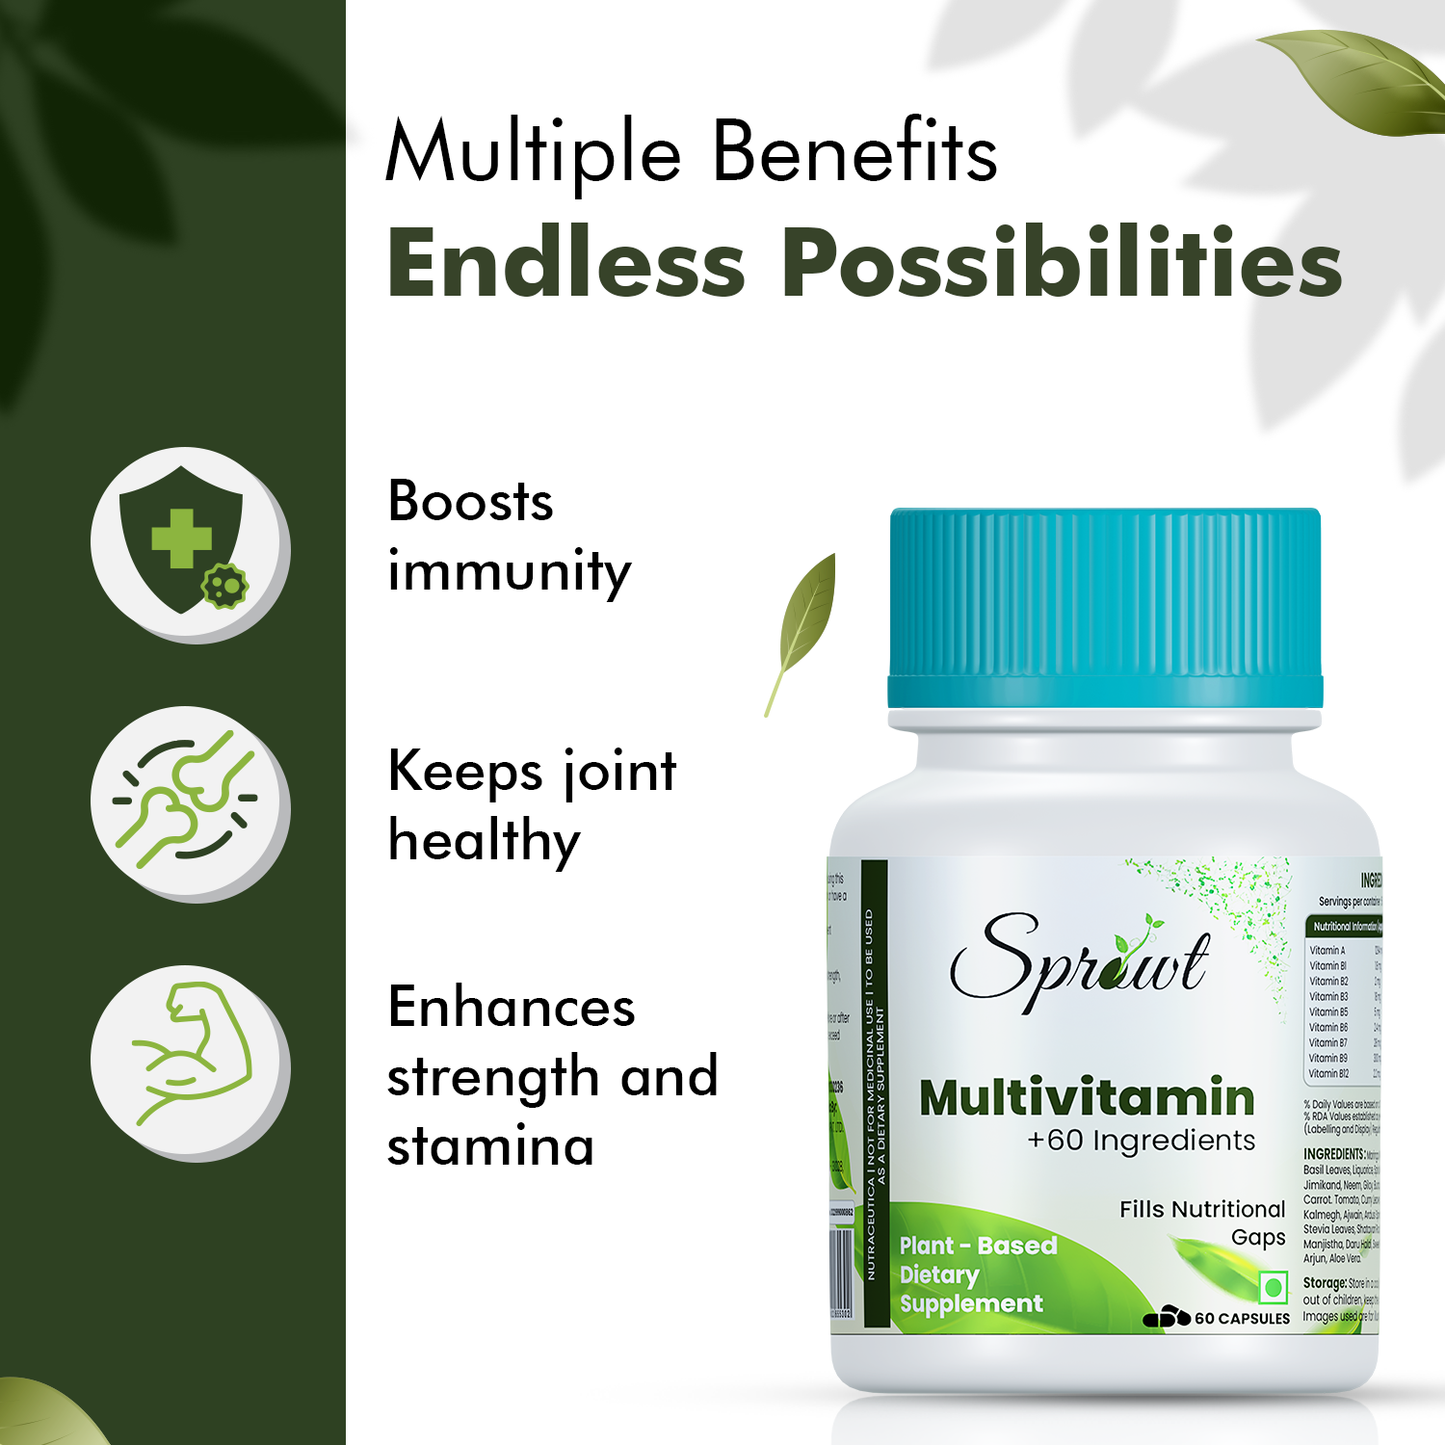 Sprowt Plant Based Multivitamin 60+ Ingredients | For Men & Women | Veg 60 Capsules  (60 Capsules)